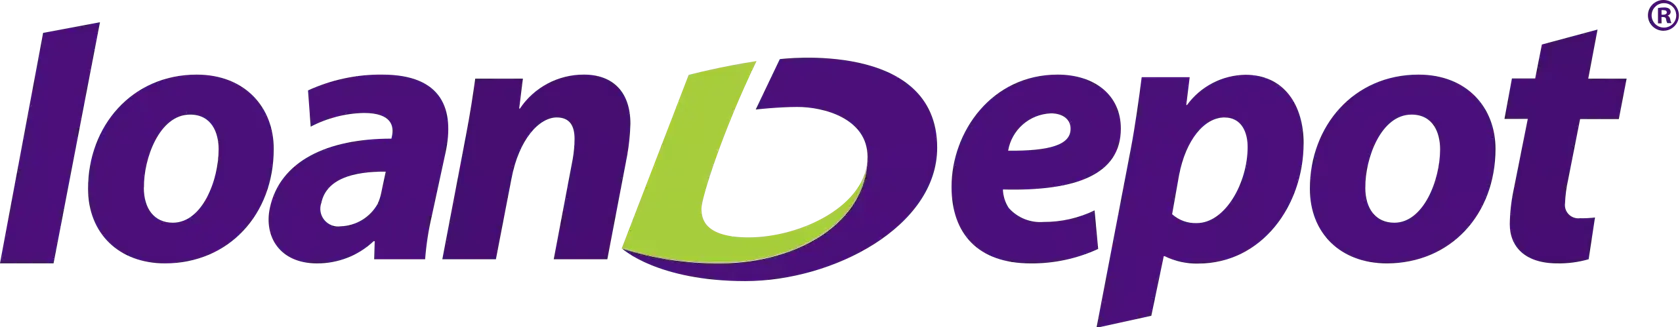 Asana Case Study - loanDepot logo